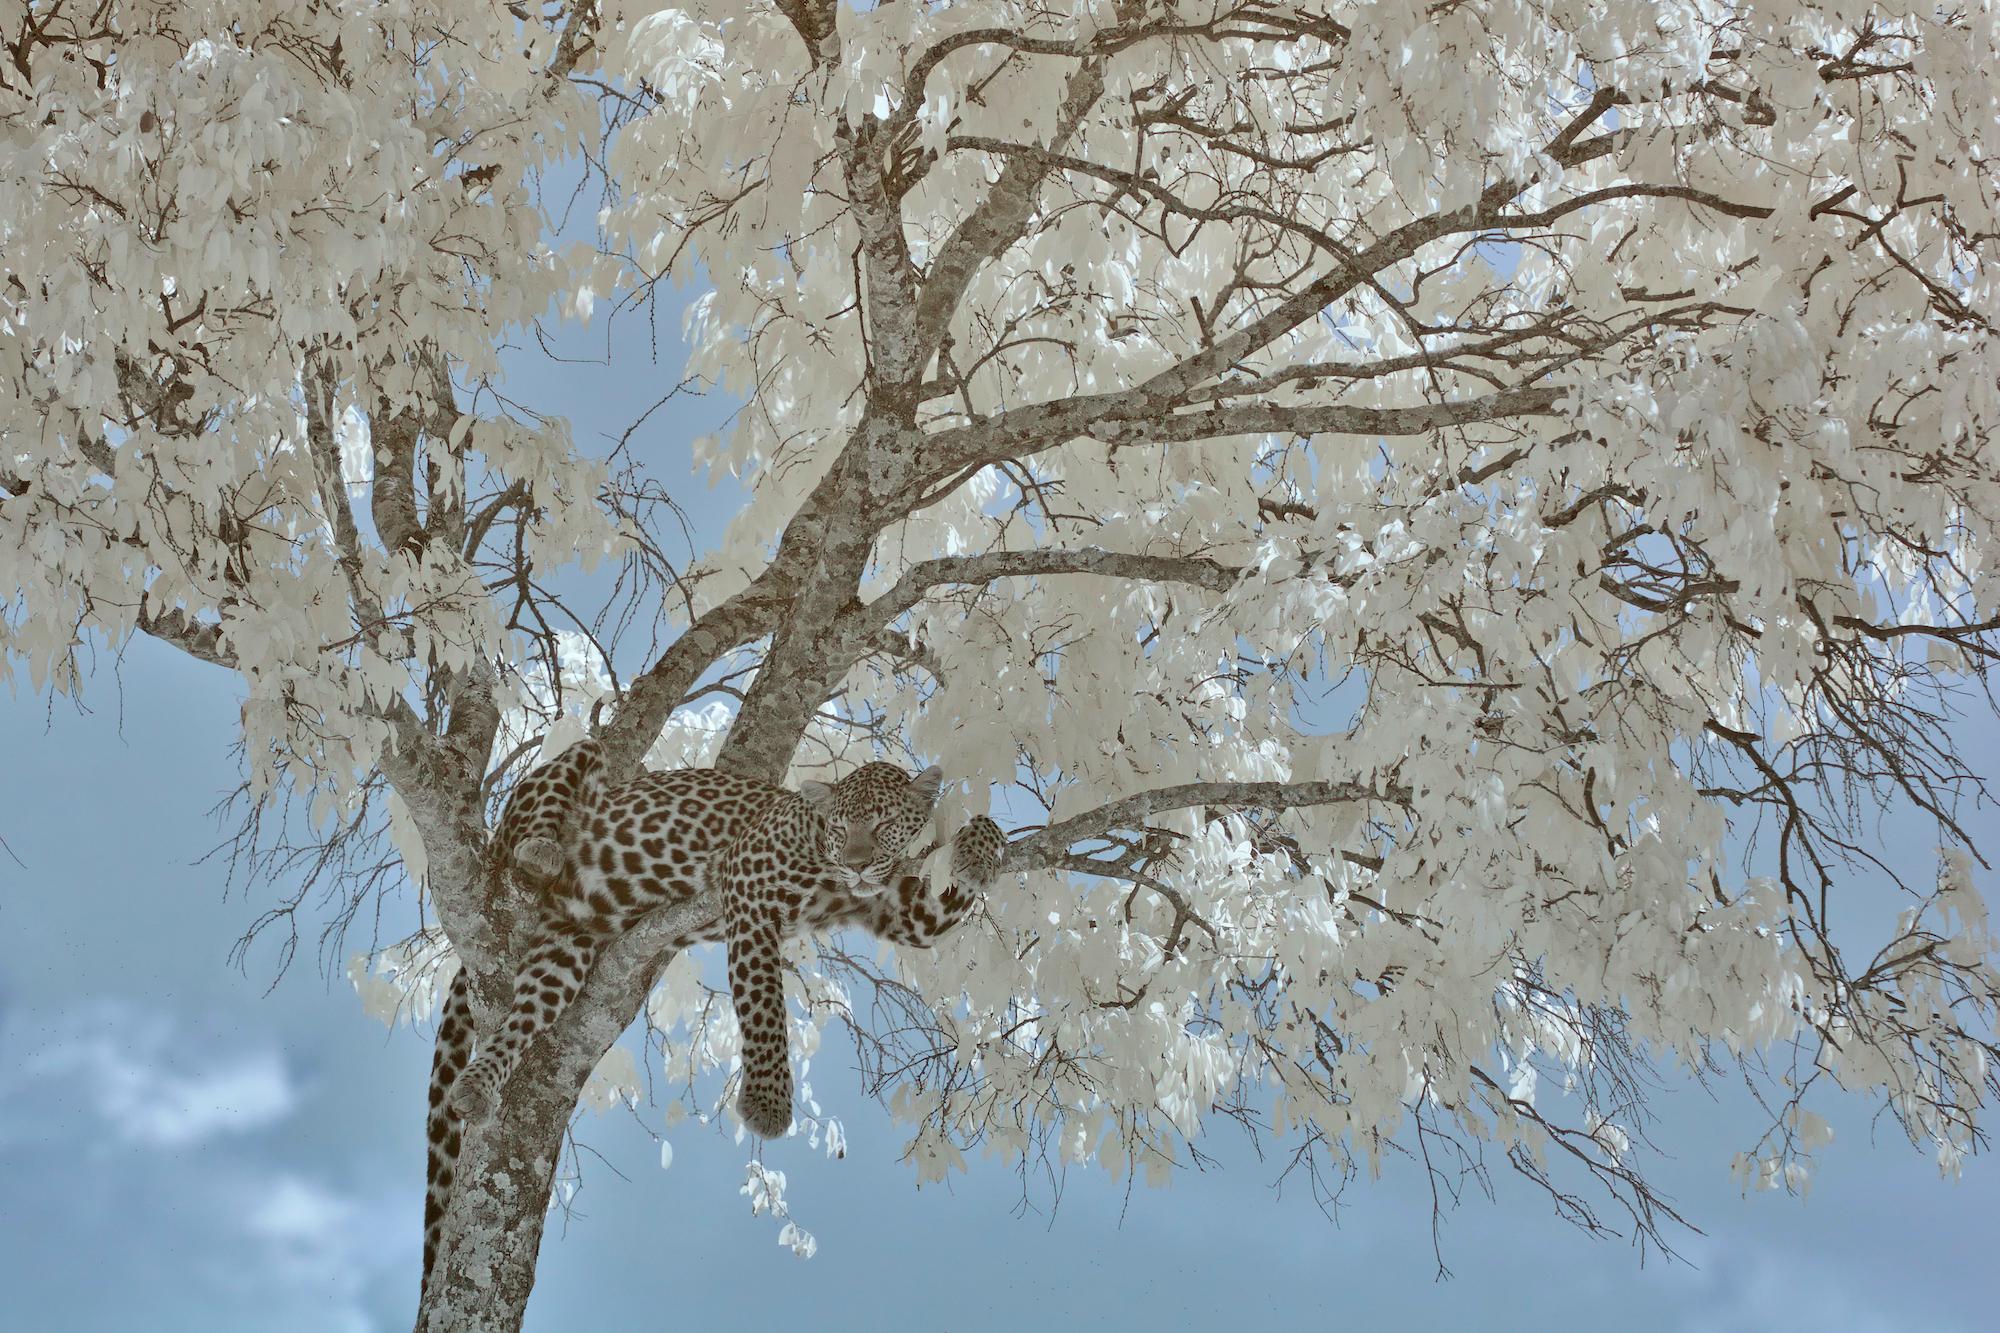 Animal Print Aditya Dicky Singh - Photographie - Paysage animalier bleu et blanc - Léopard Infrared Kenya - Nature Wildlife